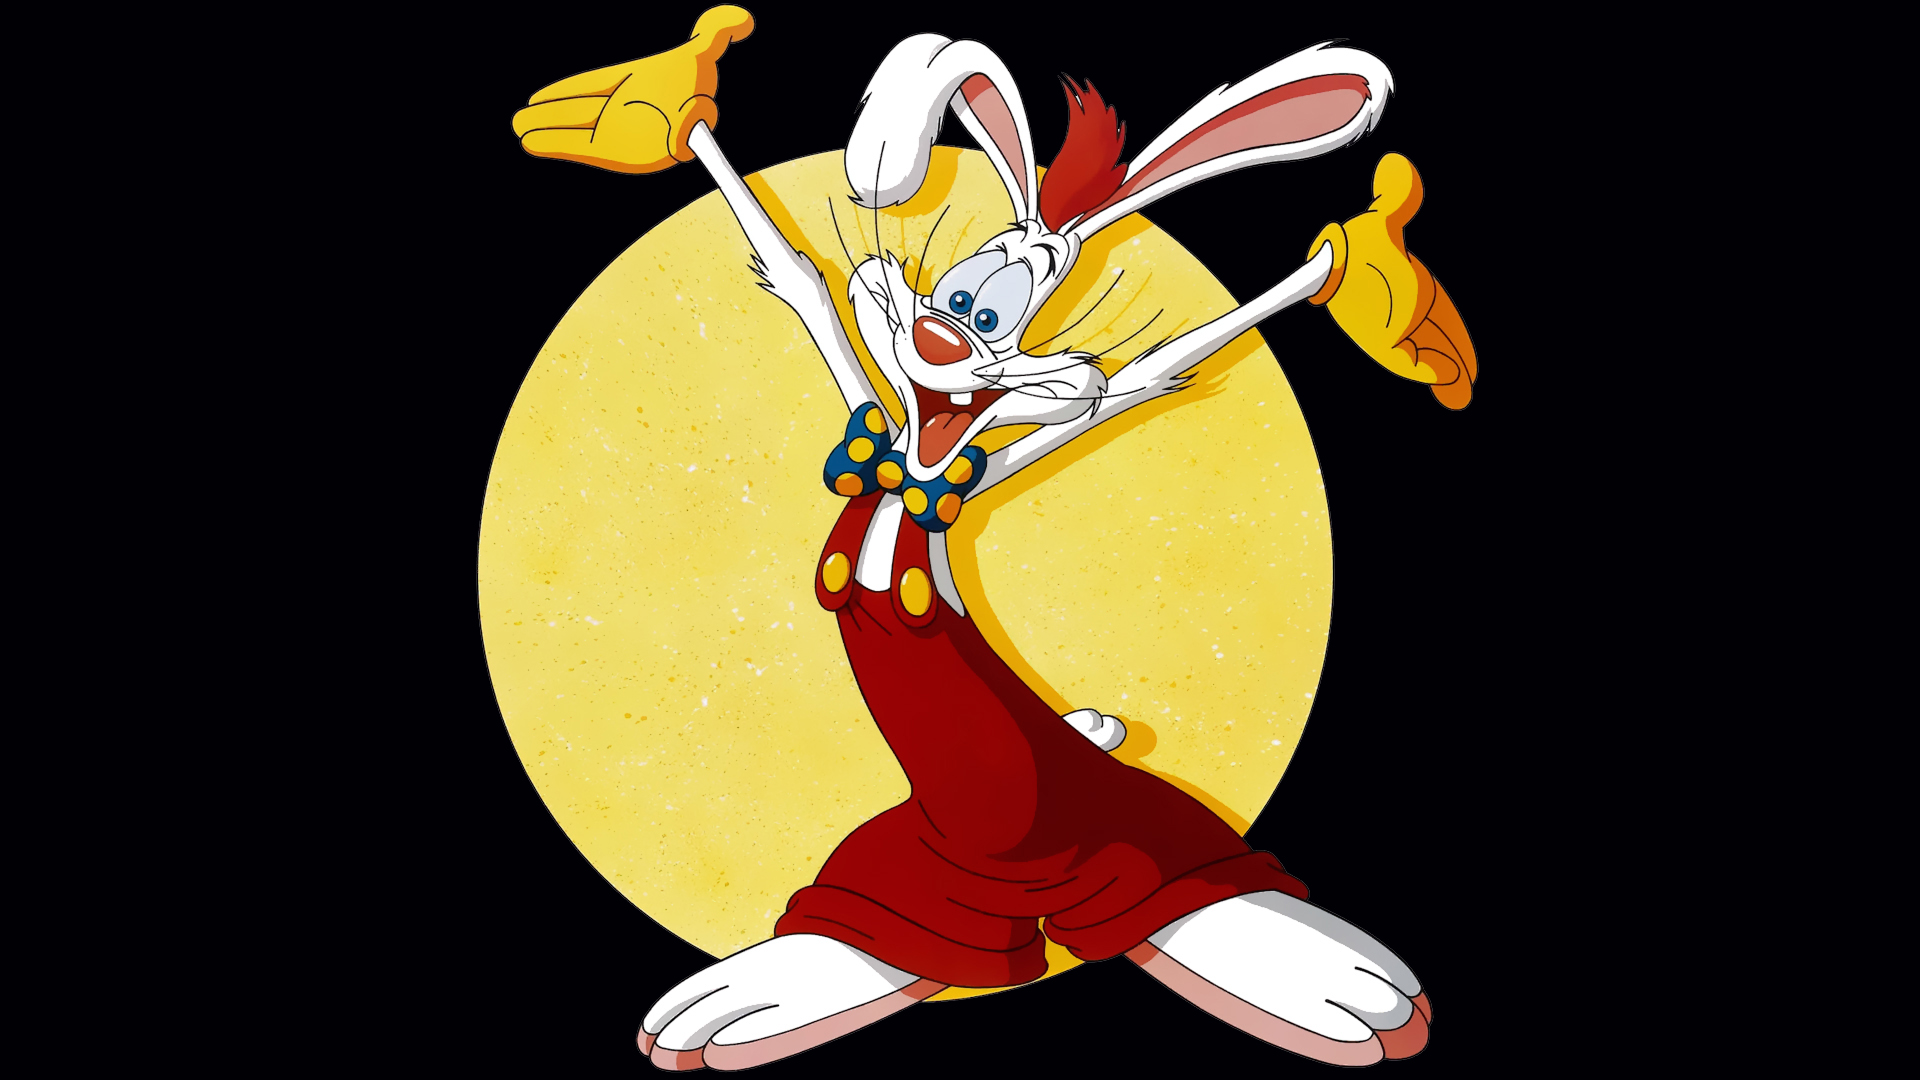 Who Framed Roger Rabbit? HD Wallpaper